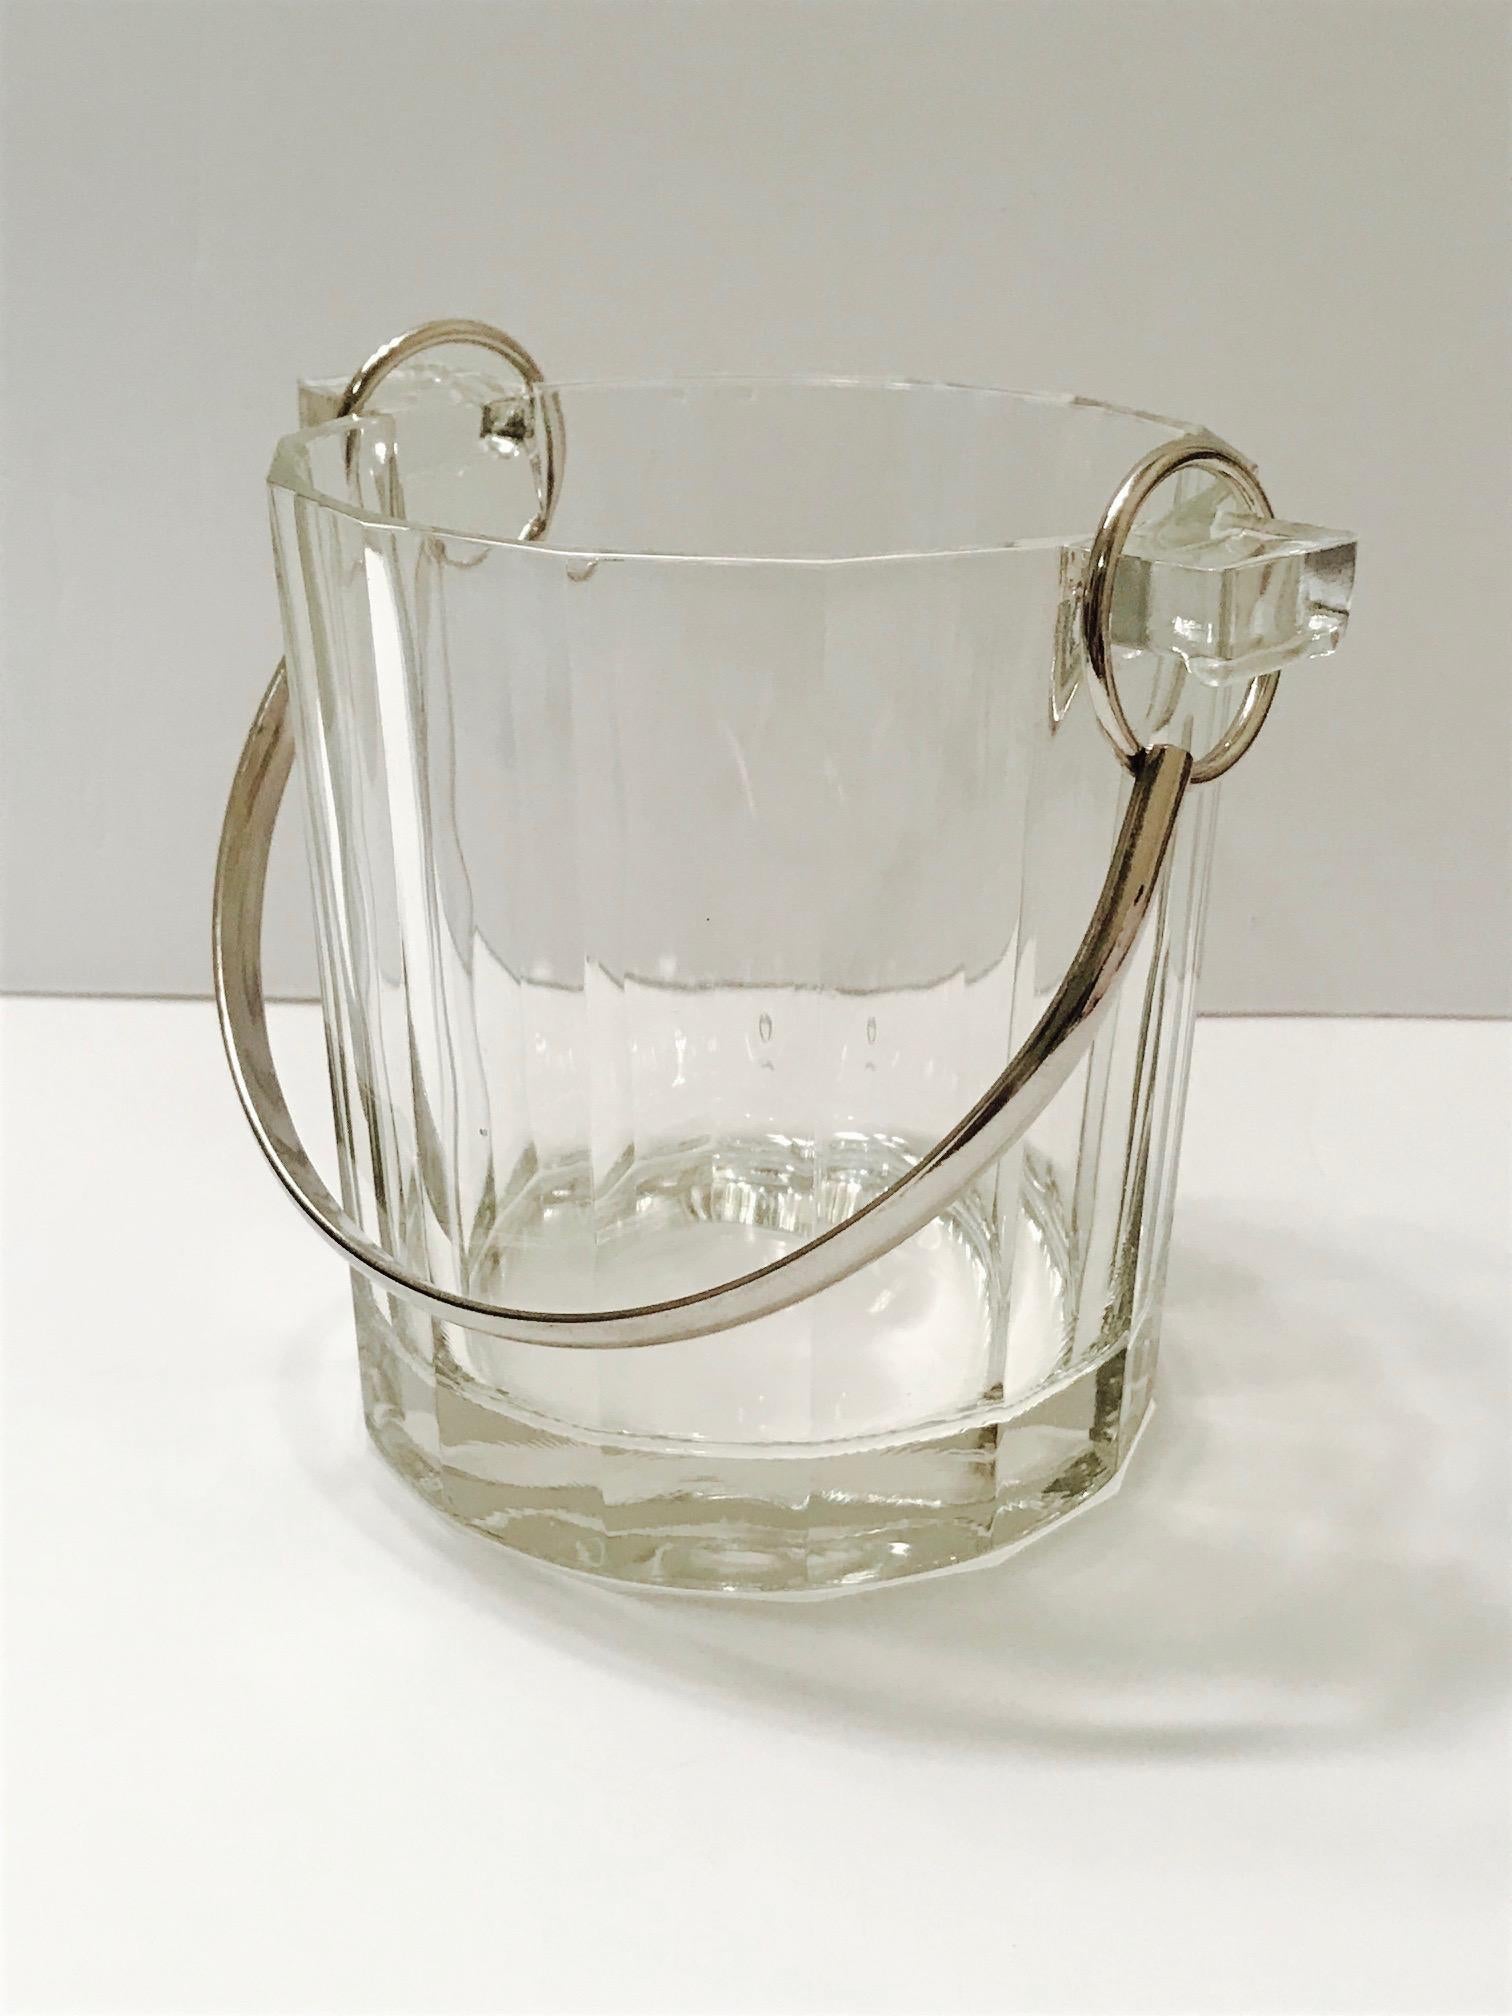 Faceted Vintage Italian Crystal Ice Bucket with Nickel Handle, 1970s